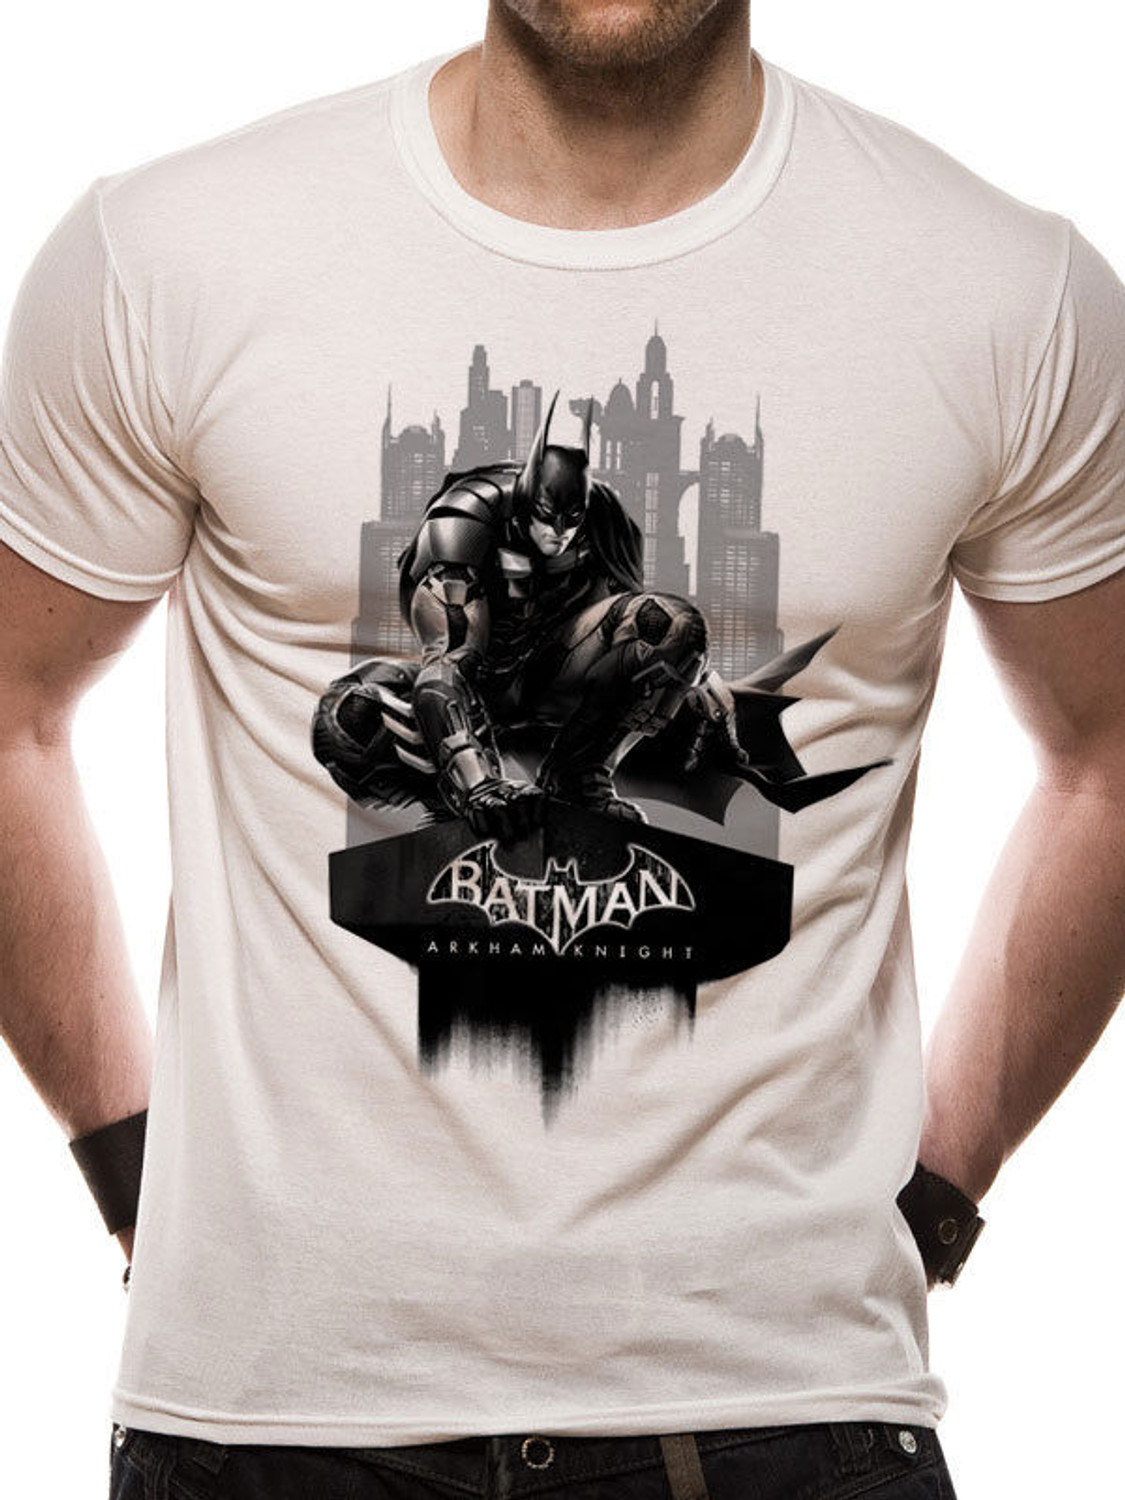 Batman Arkham Knight T-Shirt. at Gotham Batman Unisex Now Cityscape Buy Arkham Official T-shirts Knight